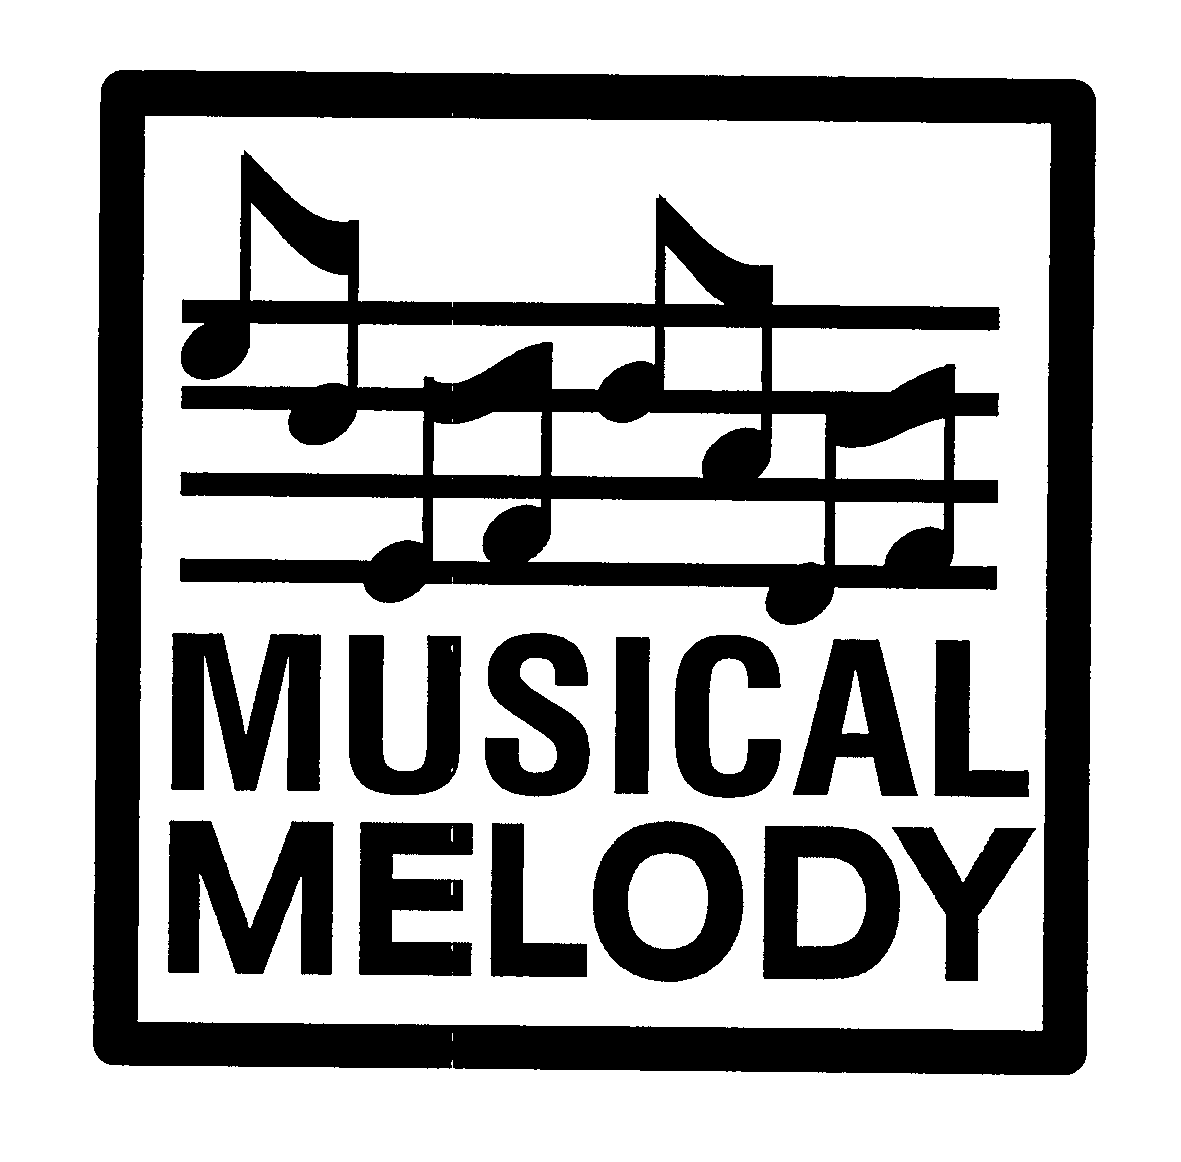  MUSICAL MELODY